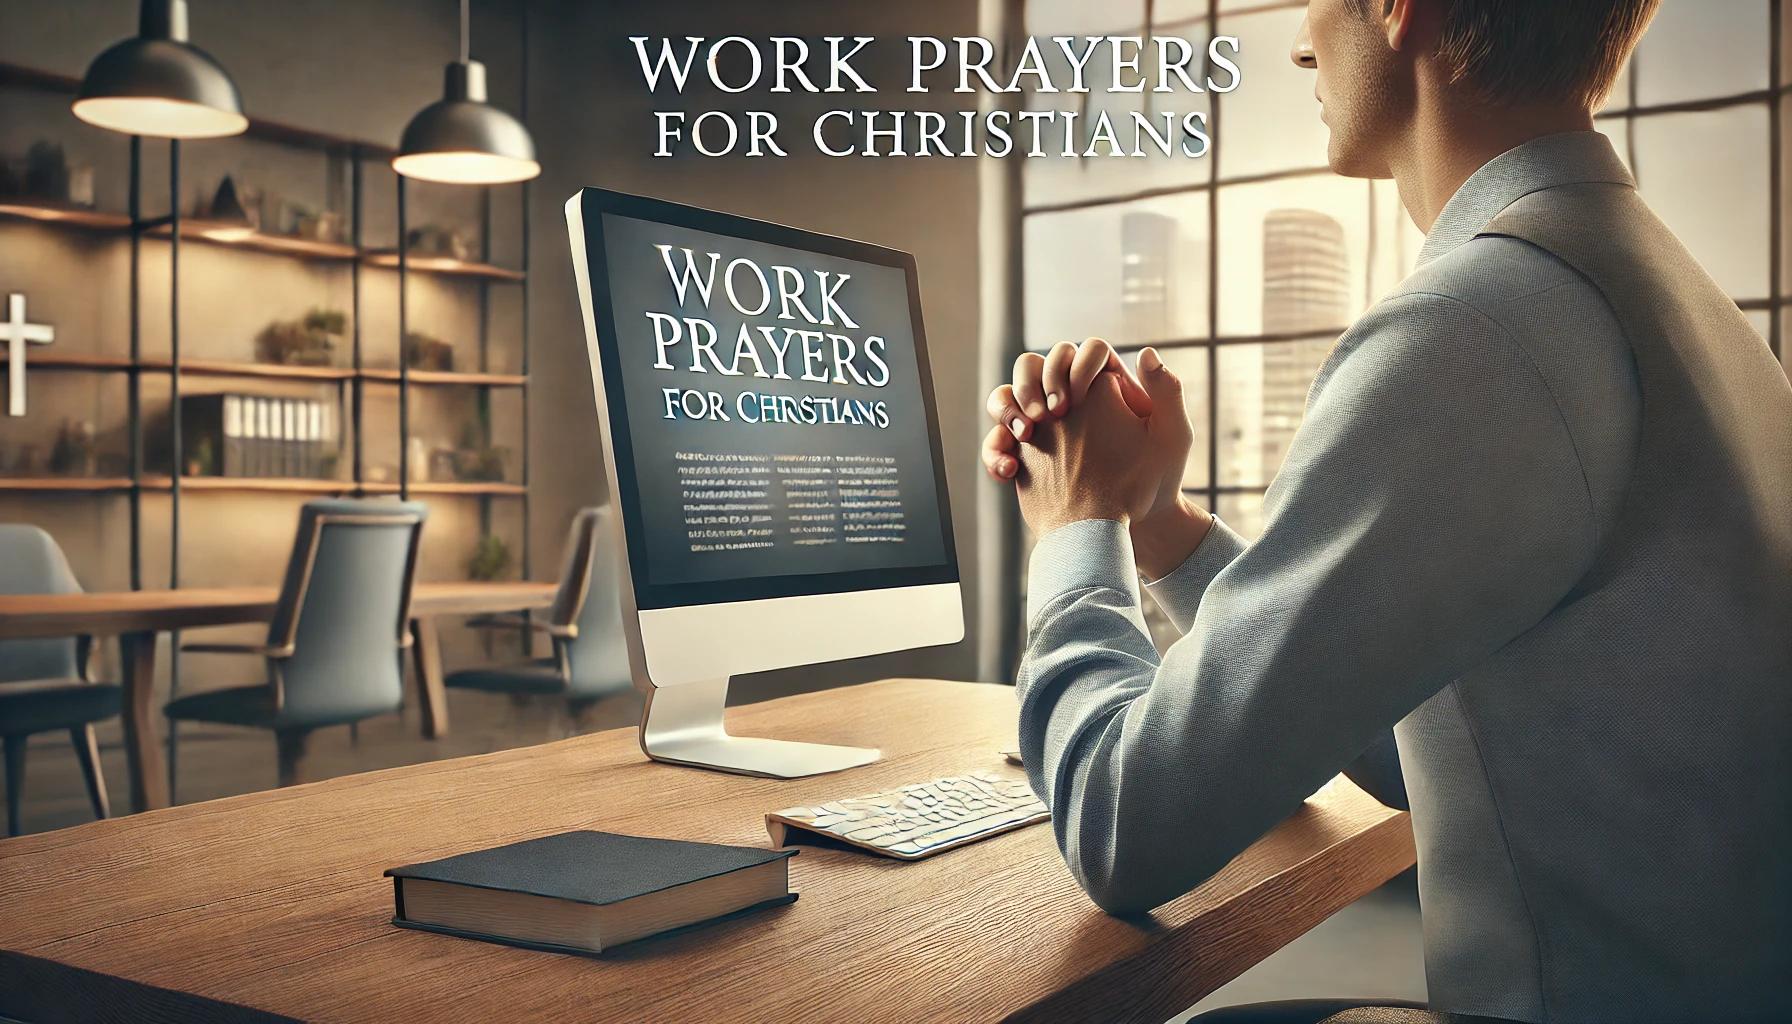 15 Work Prayers For Christians